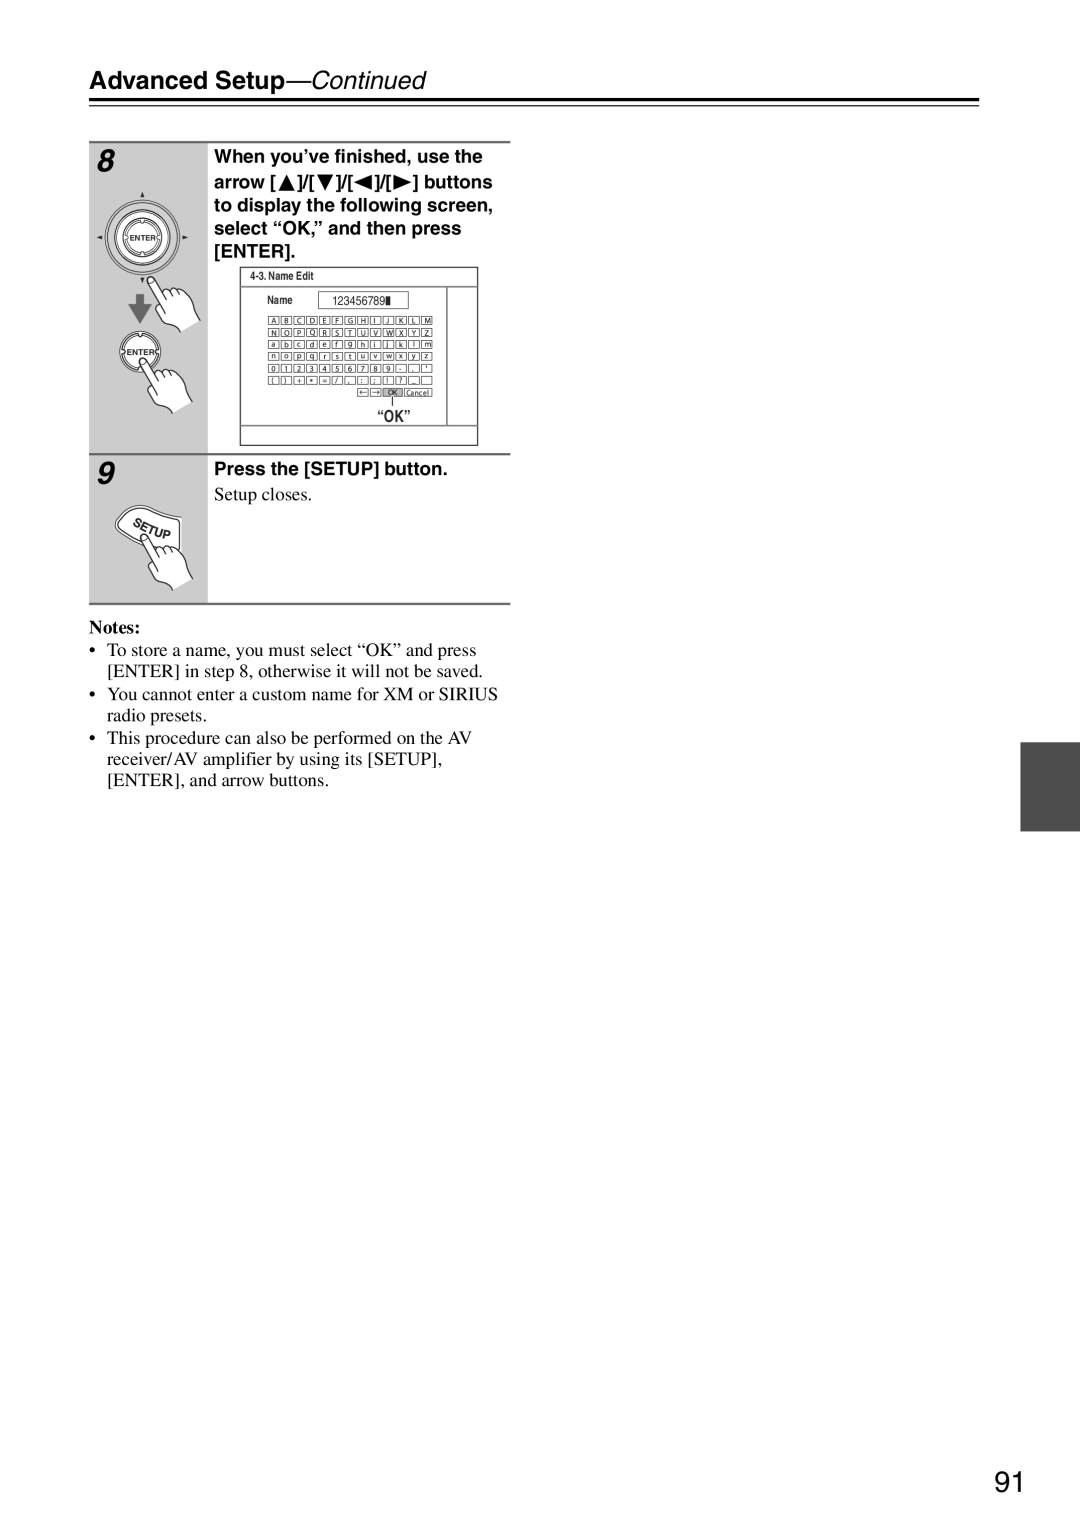 Onkyo TX-SA705 instruction manual Advanced Setup—Continued, 9Press the SETUP button, Notes 